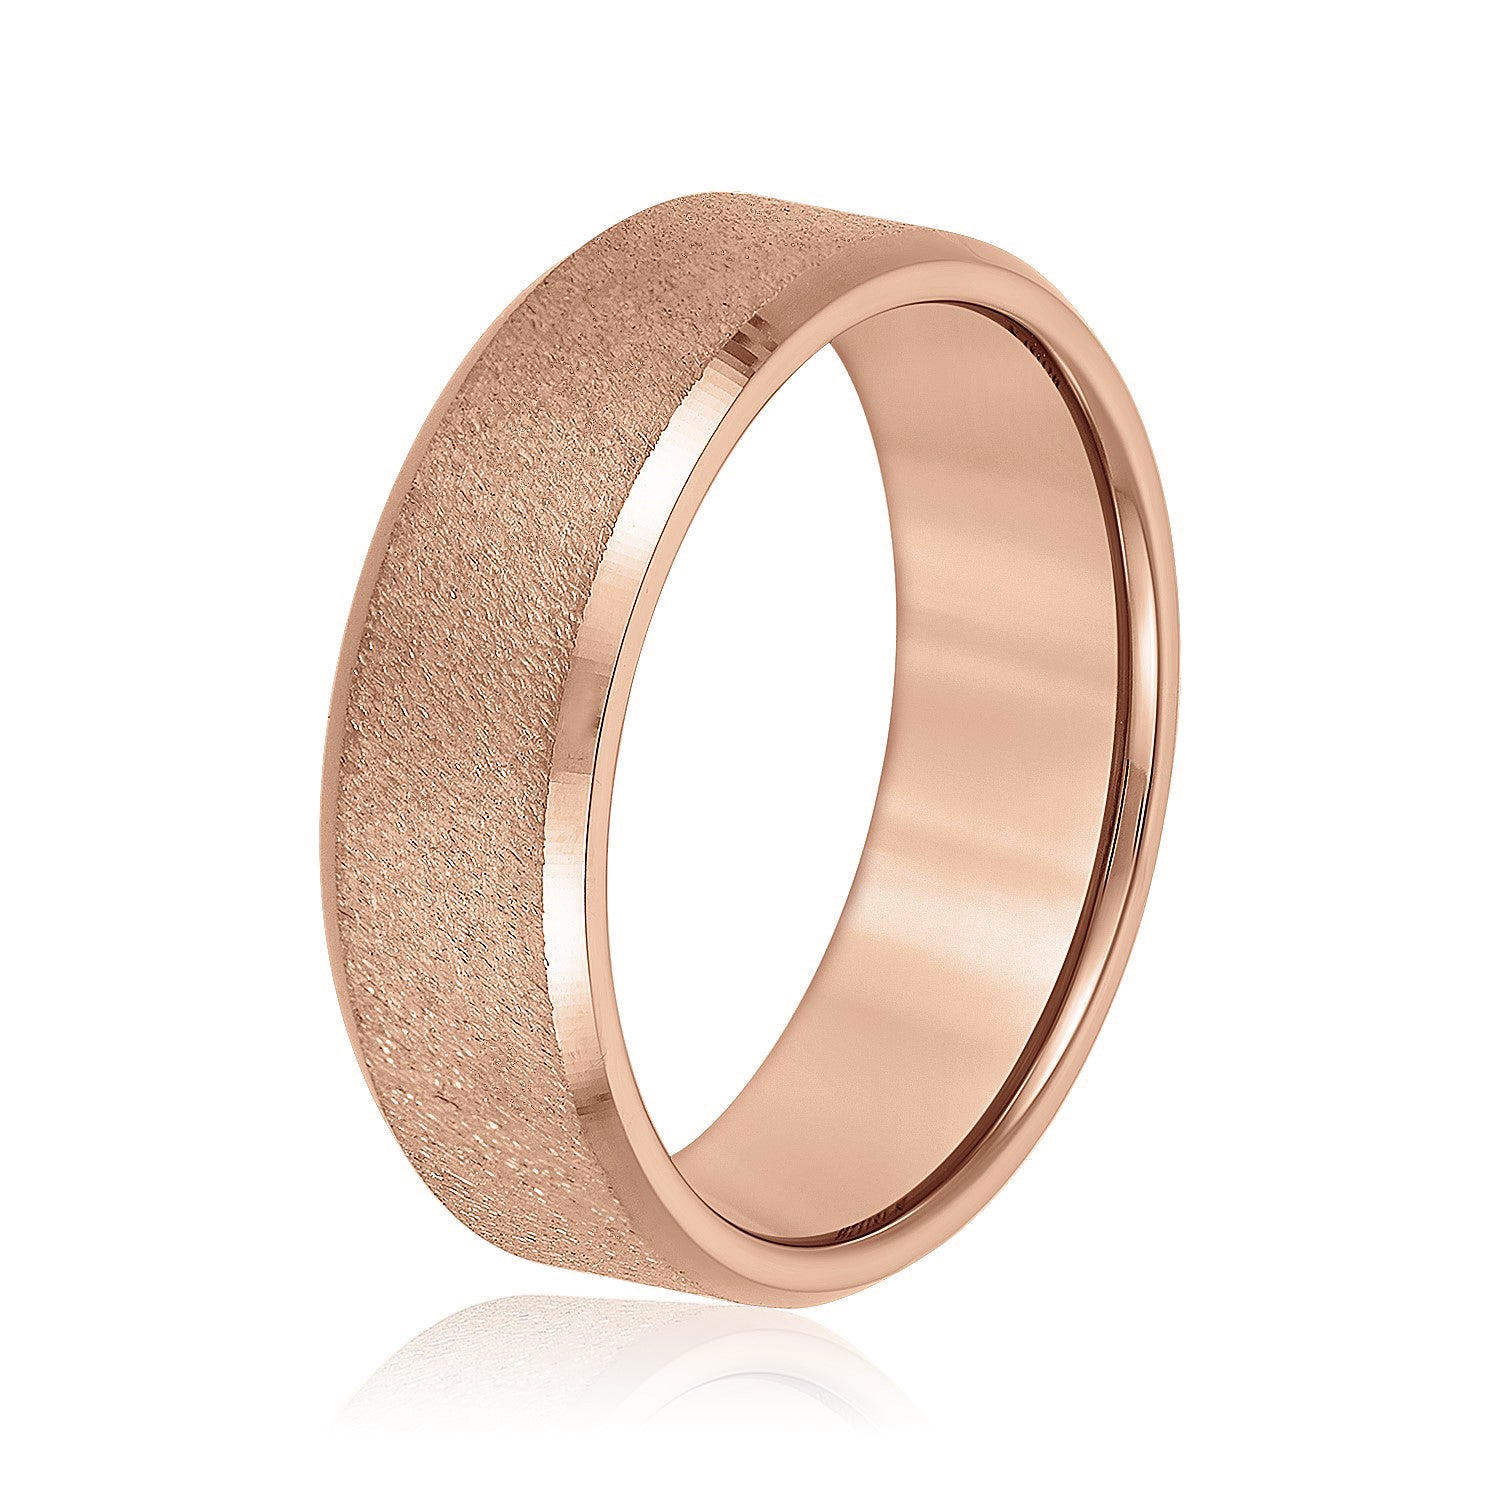 Men's Sandblasted Wedding Ring With High Polish Edges